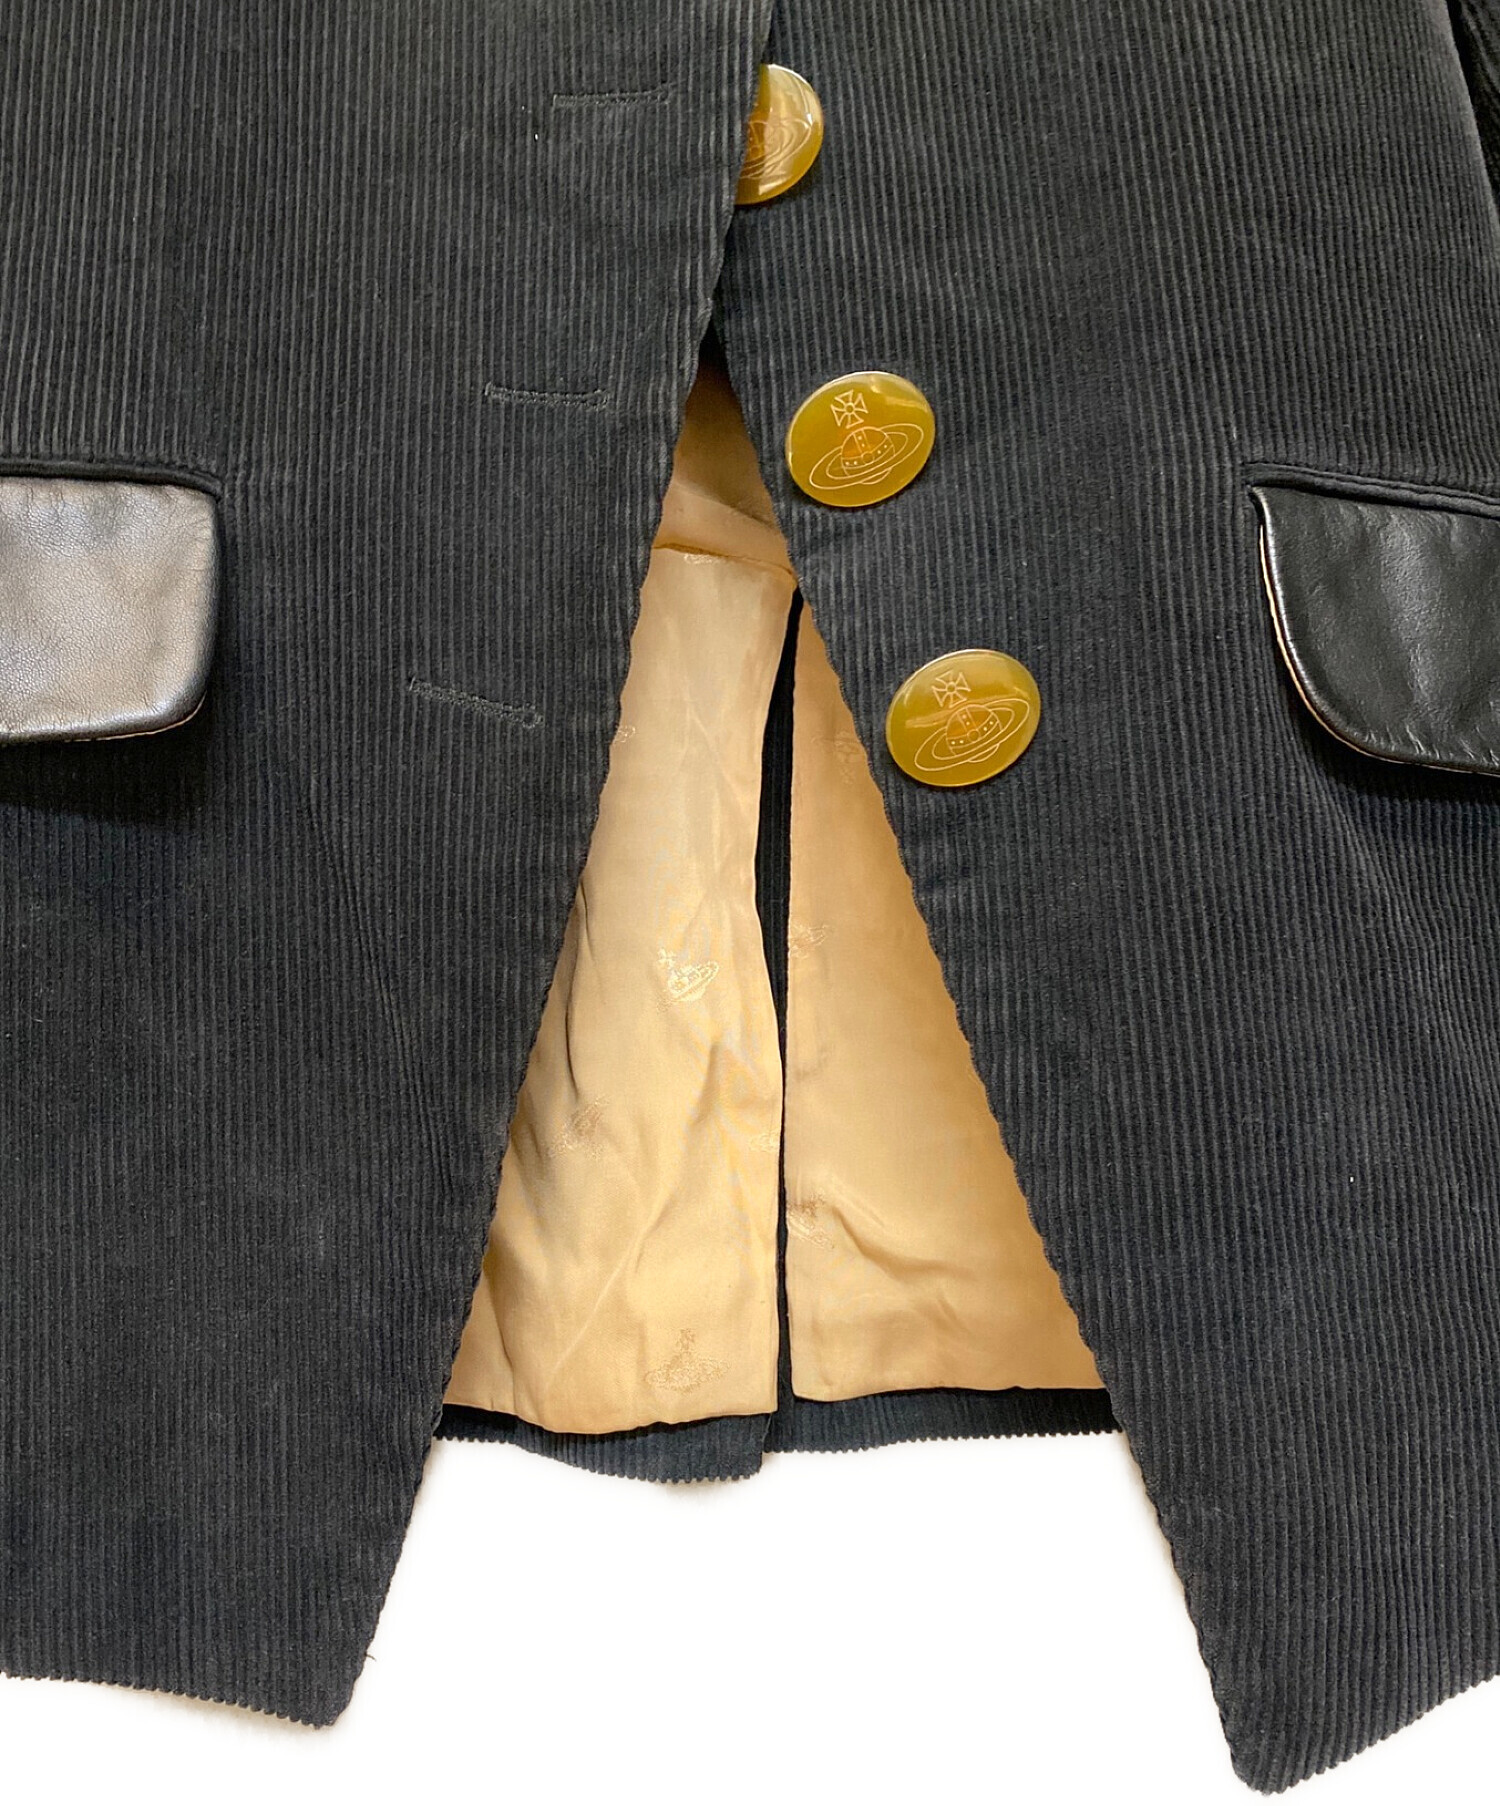 Vivienne Westwood コーディロイジャケット - テーラードジャケット